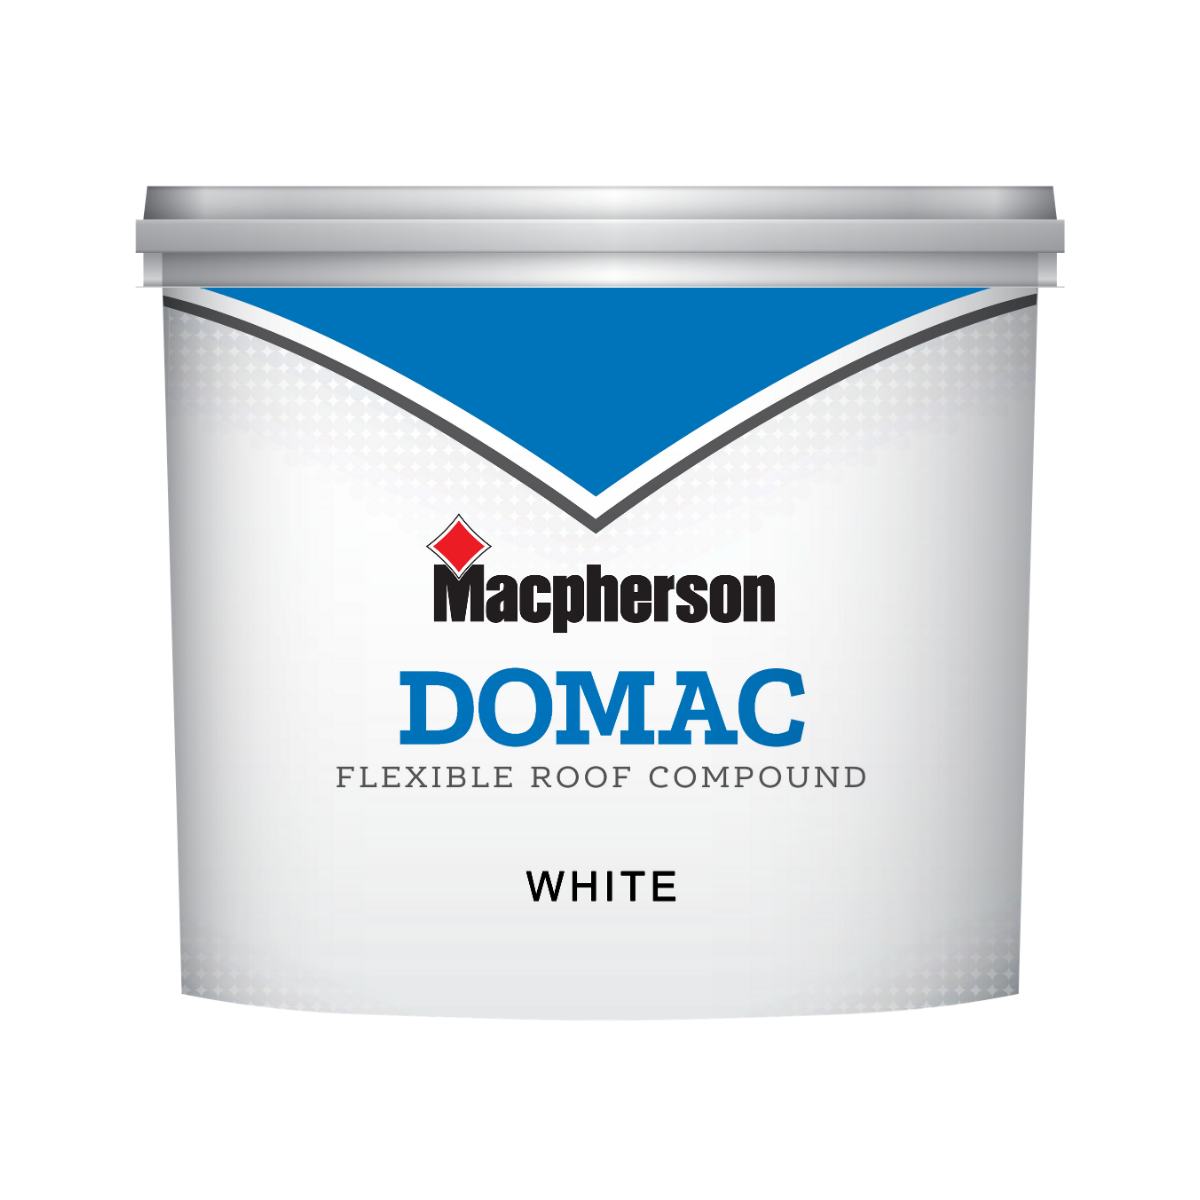 Macpherson Domac